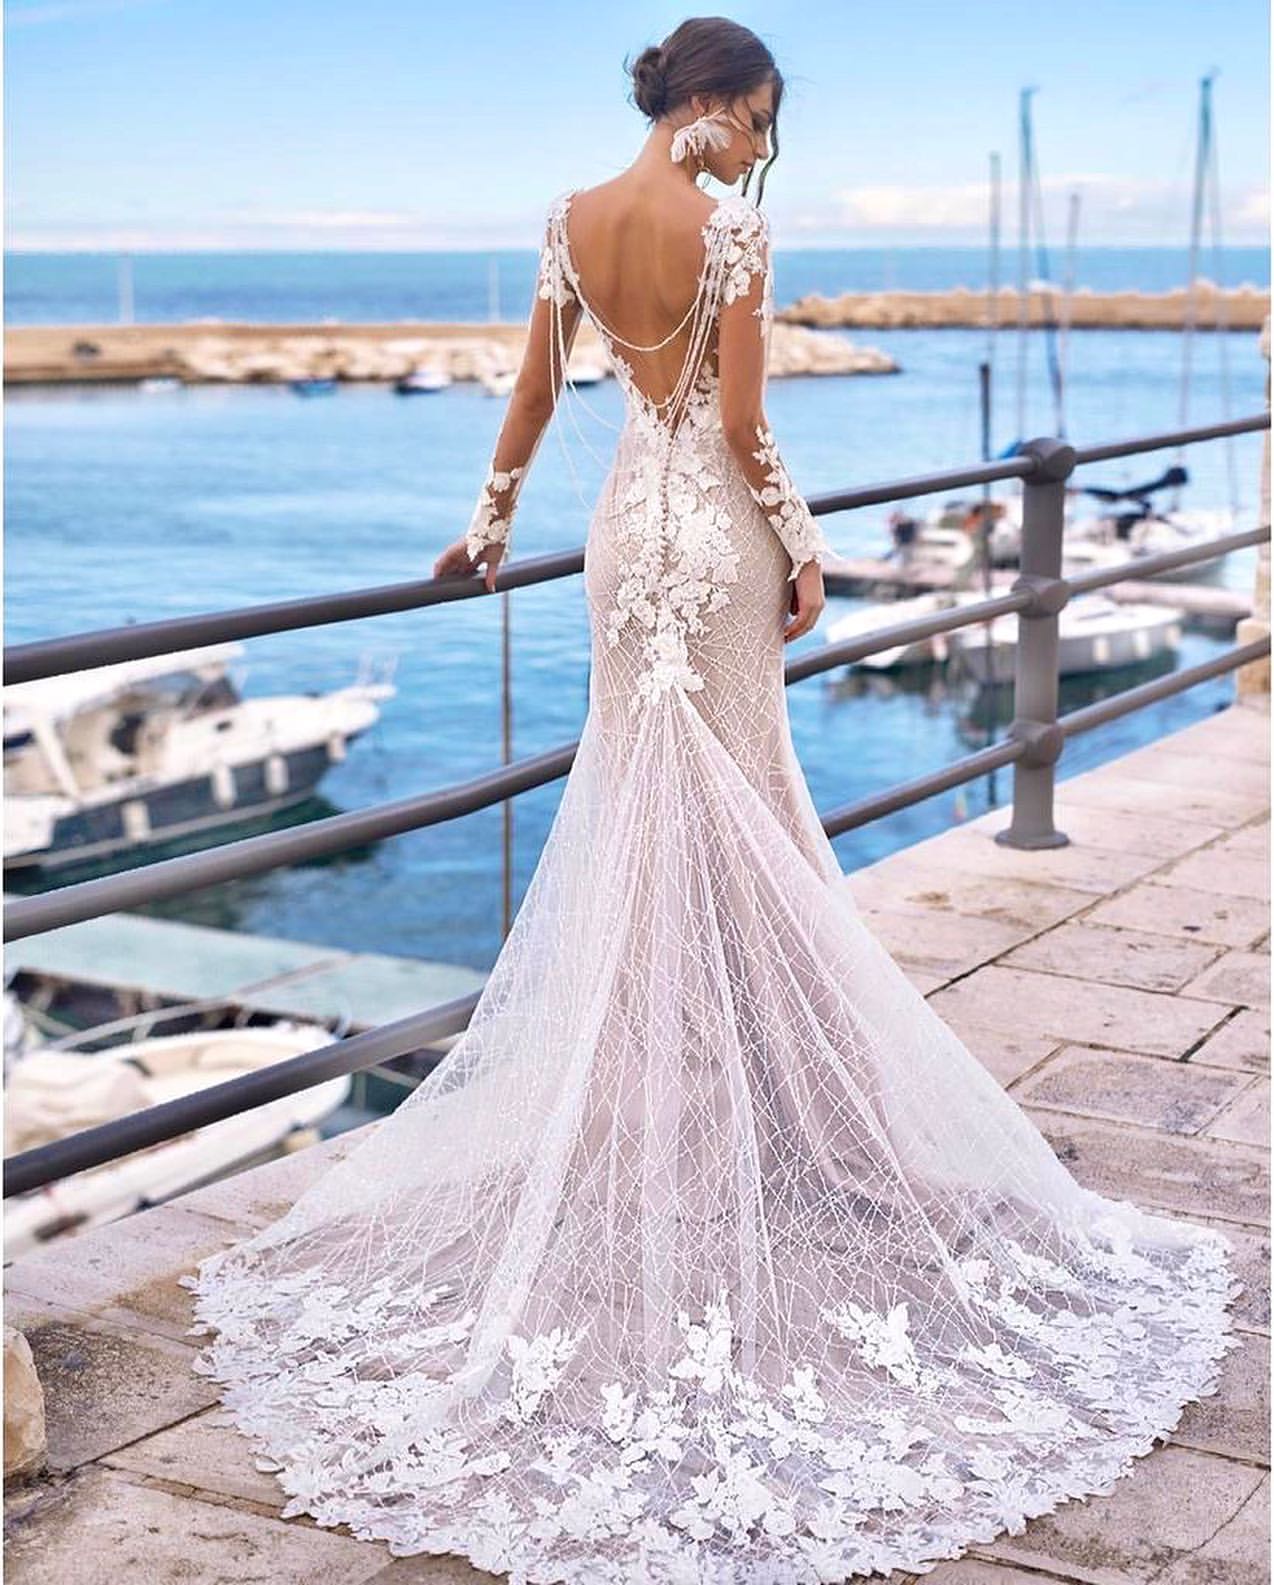 backless lace wedding dress